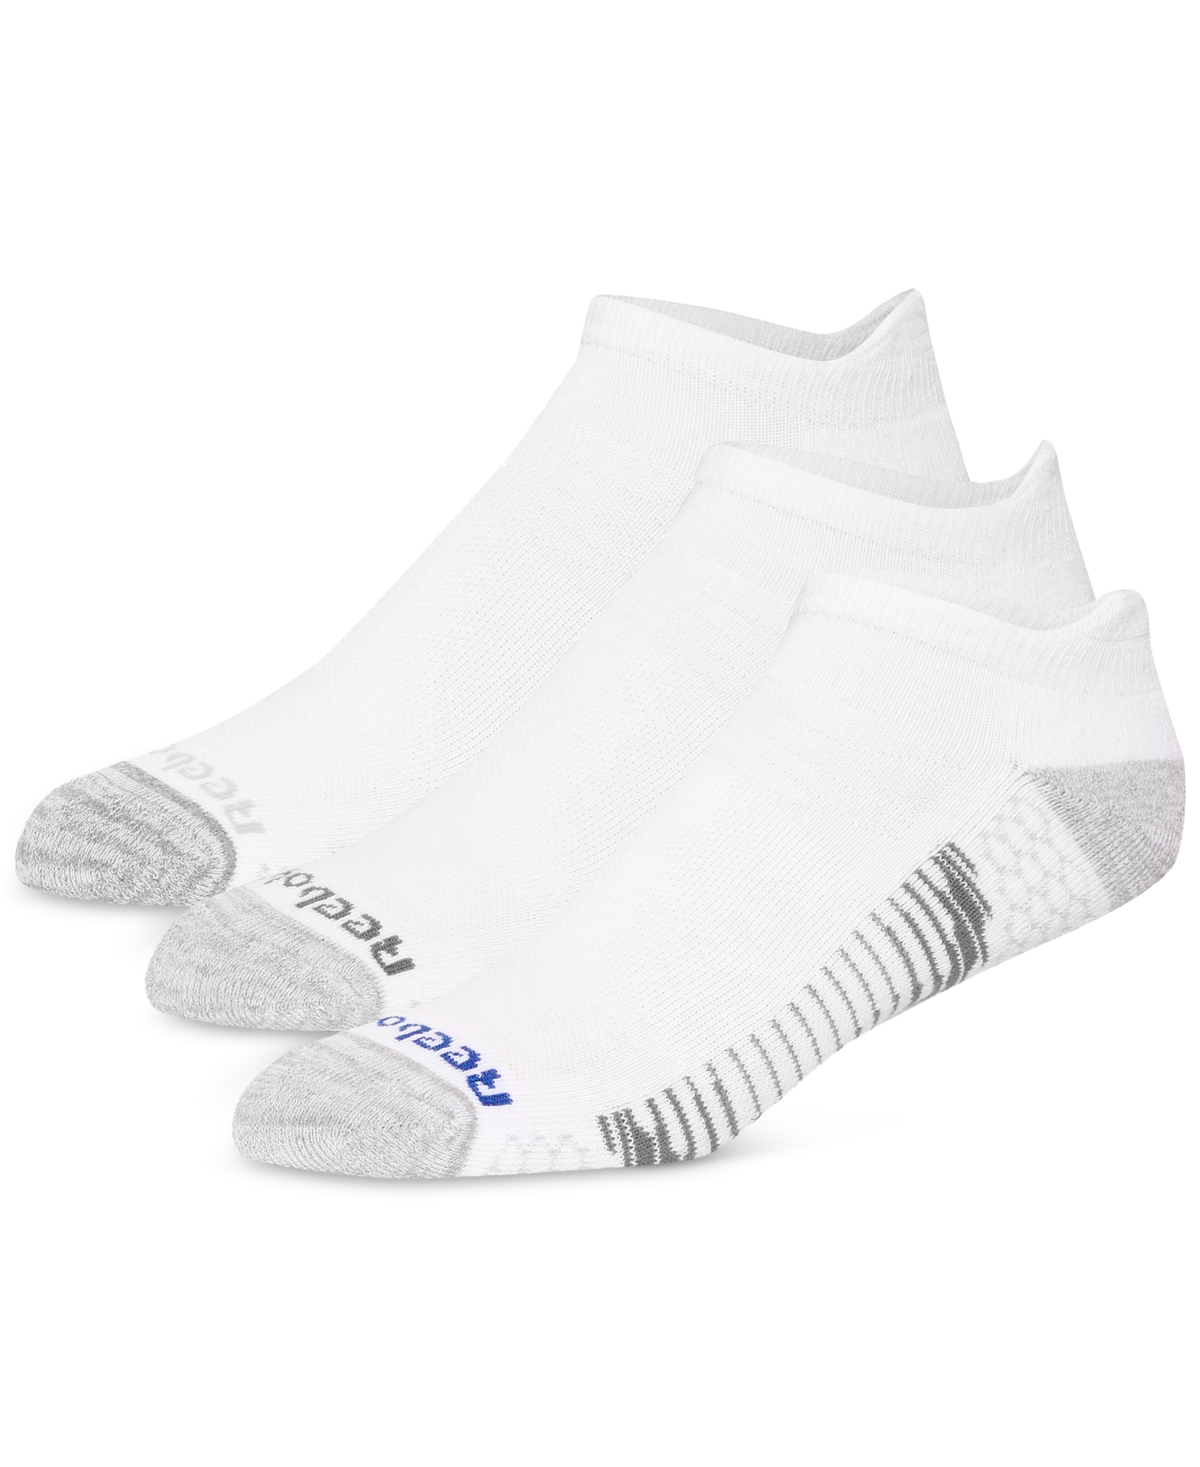 Men's Targeted Cushion Running Low Cut Socks, Pack of 3 - White